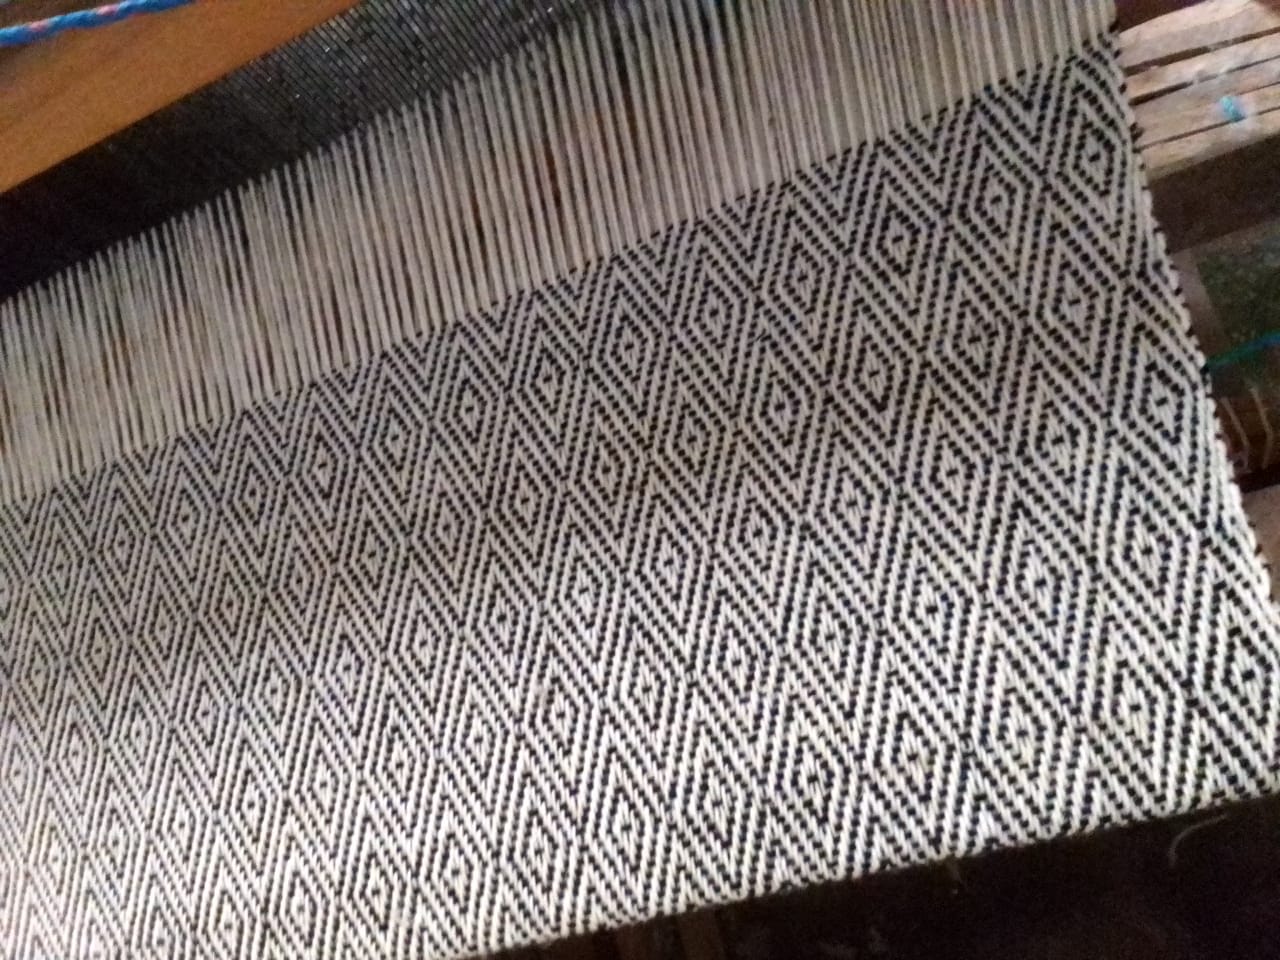 Rombo Wool Rug Aztec - Southwestern - Ethnic Design - Black and White diamond design - Small rug